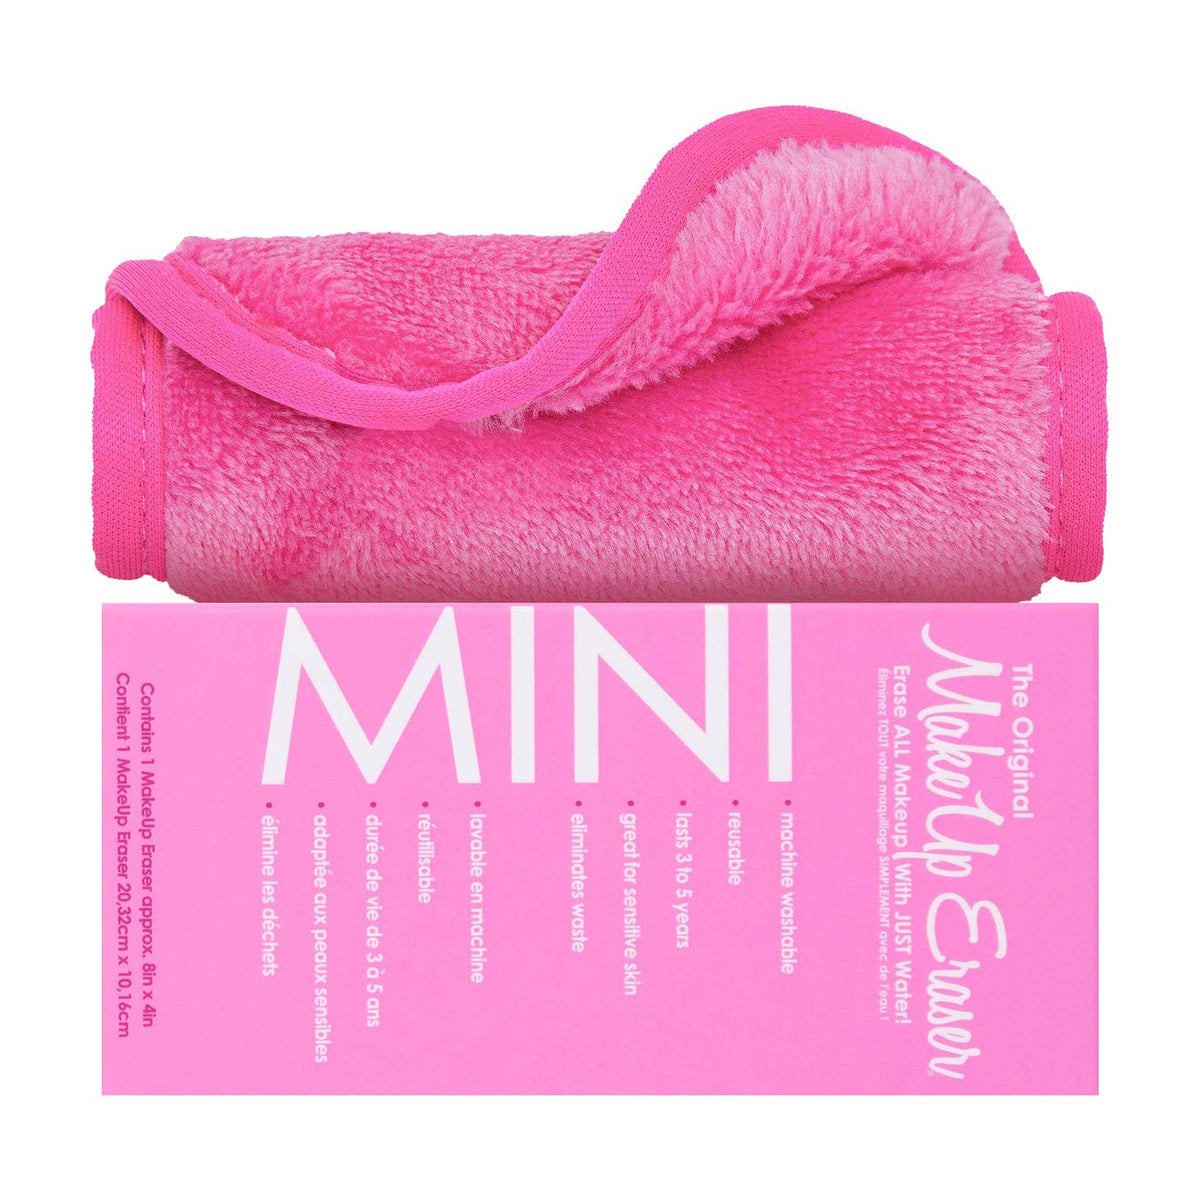 Assorted Colors Mini Eraser | The Original MakeUp Eraser